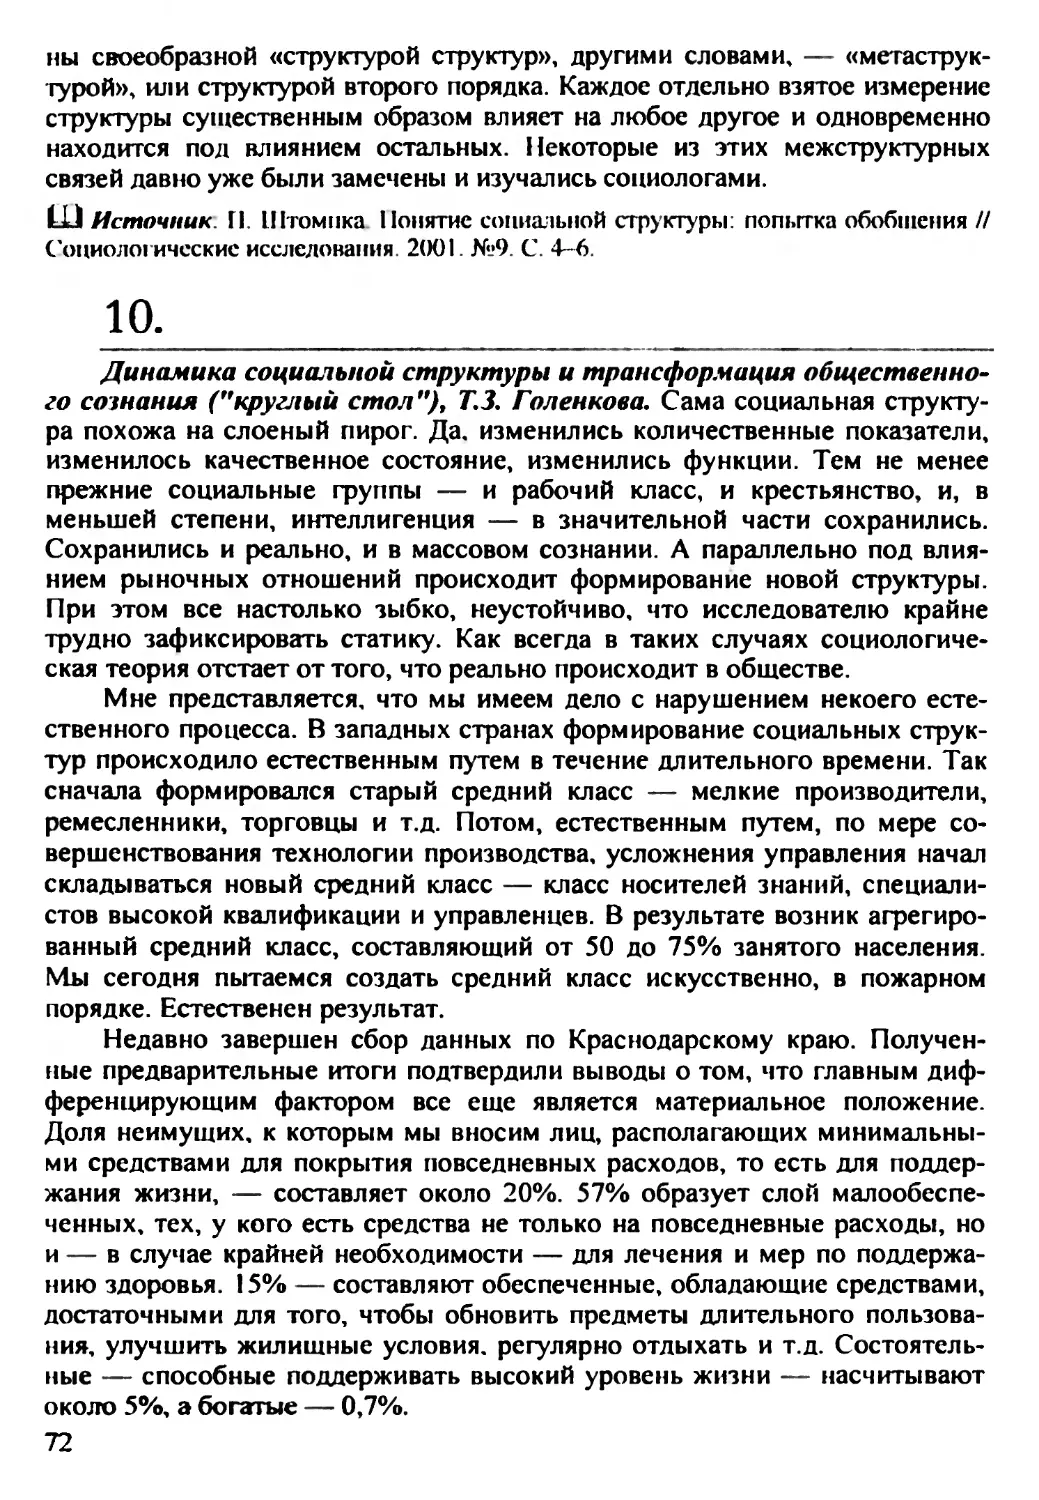 10. Т.З. Голенкова, Е.Д. Игатханян